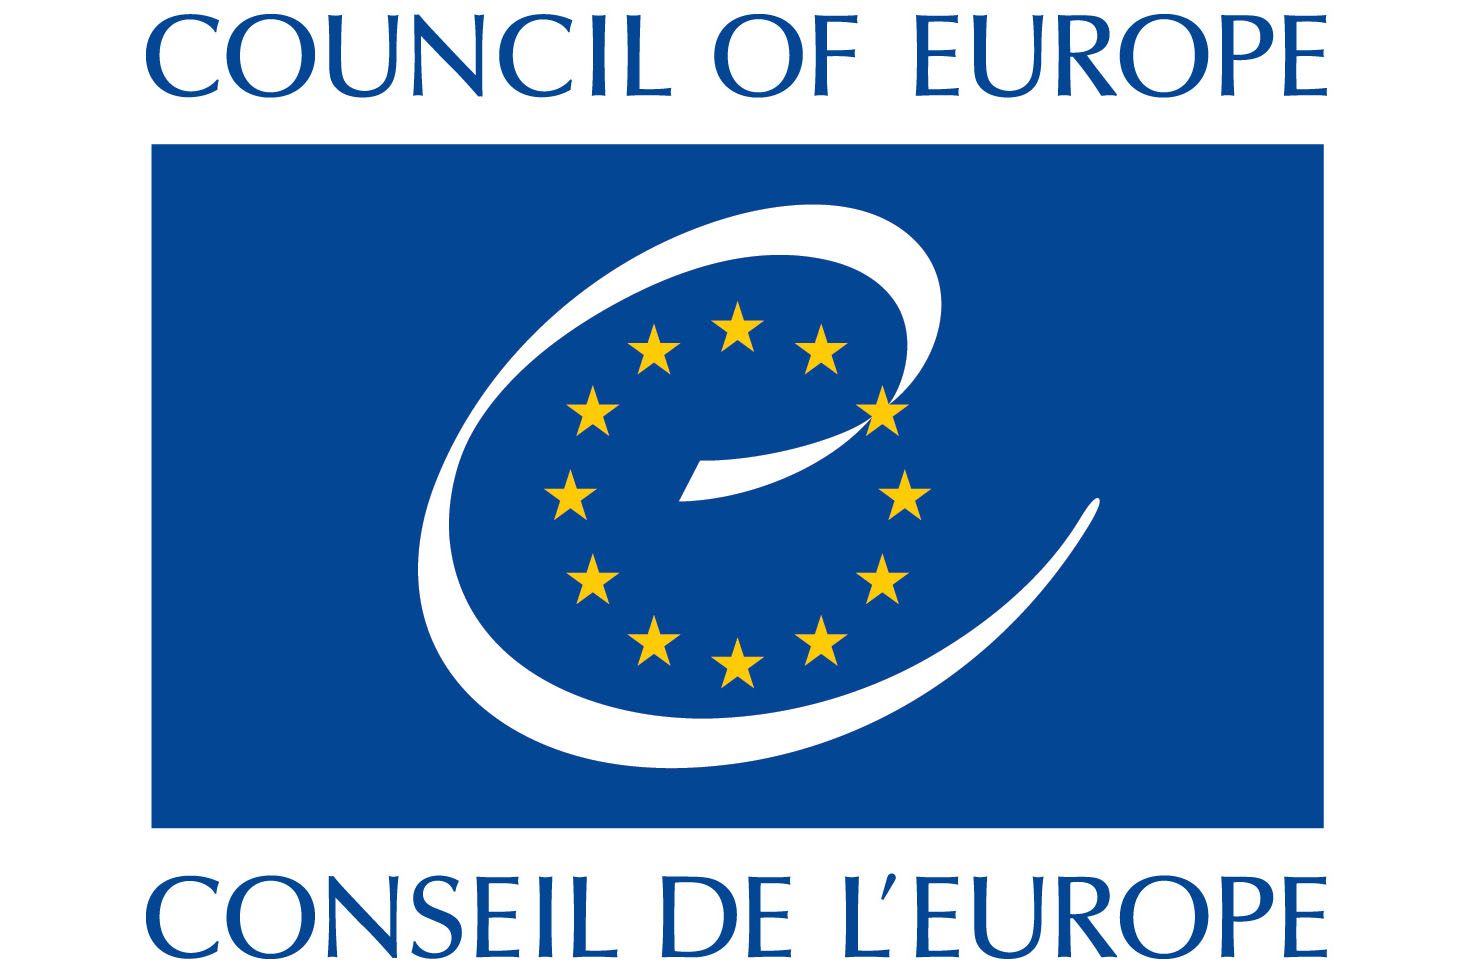 Council of Europe logo